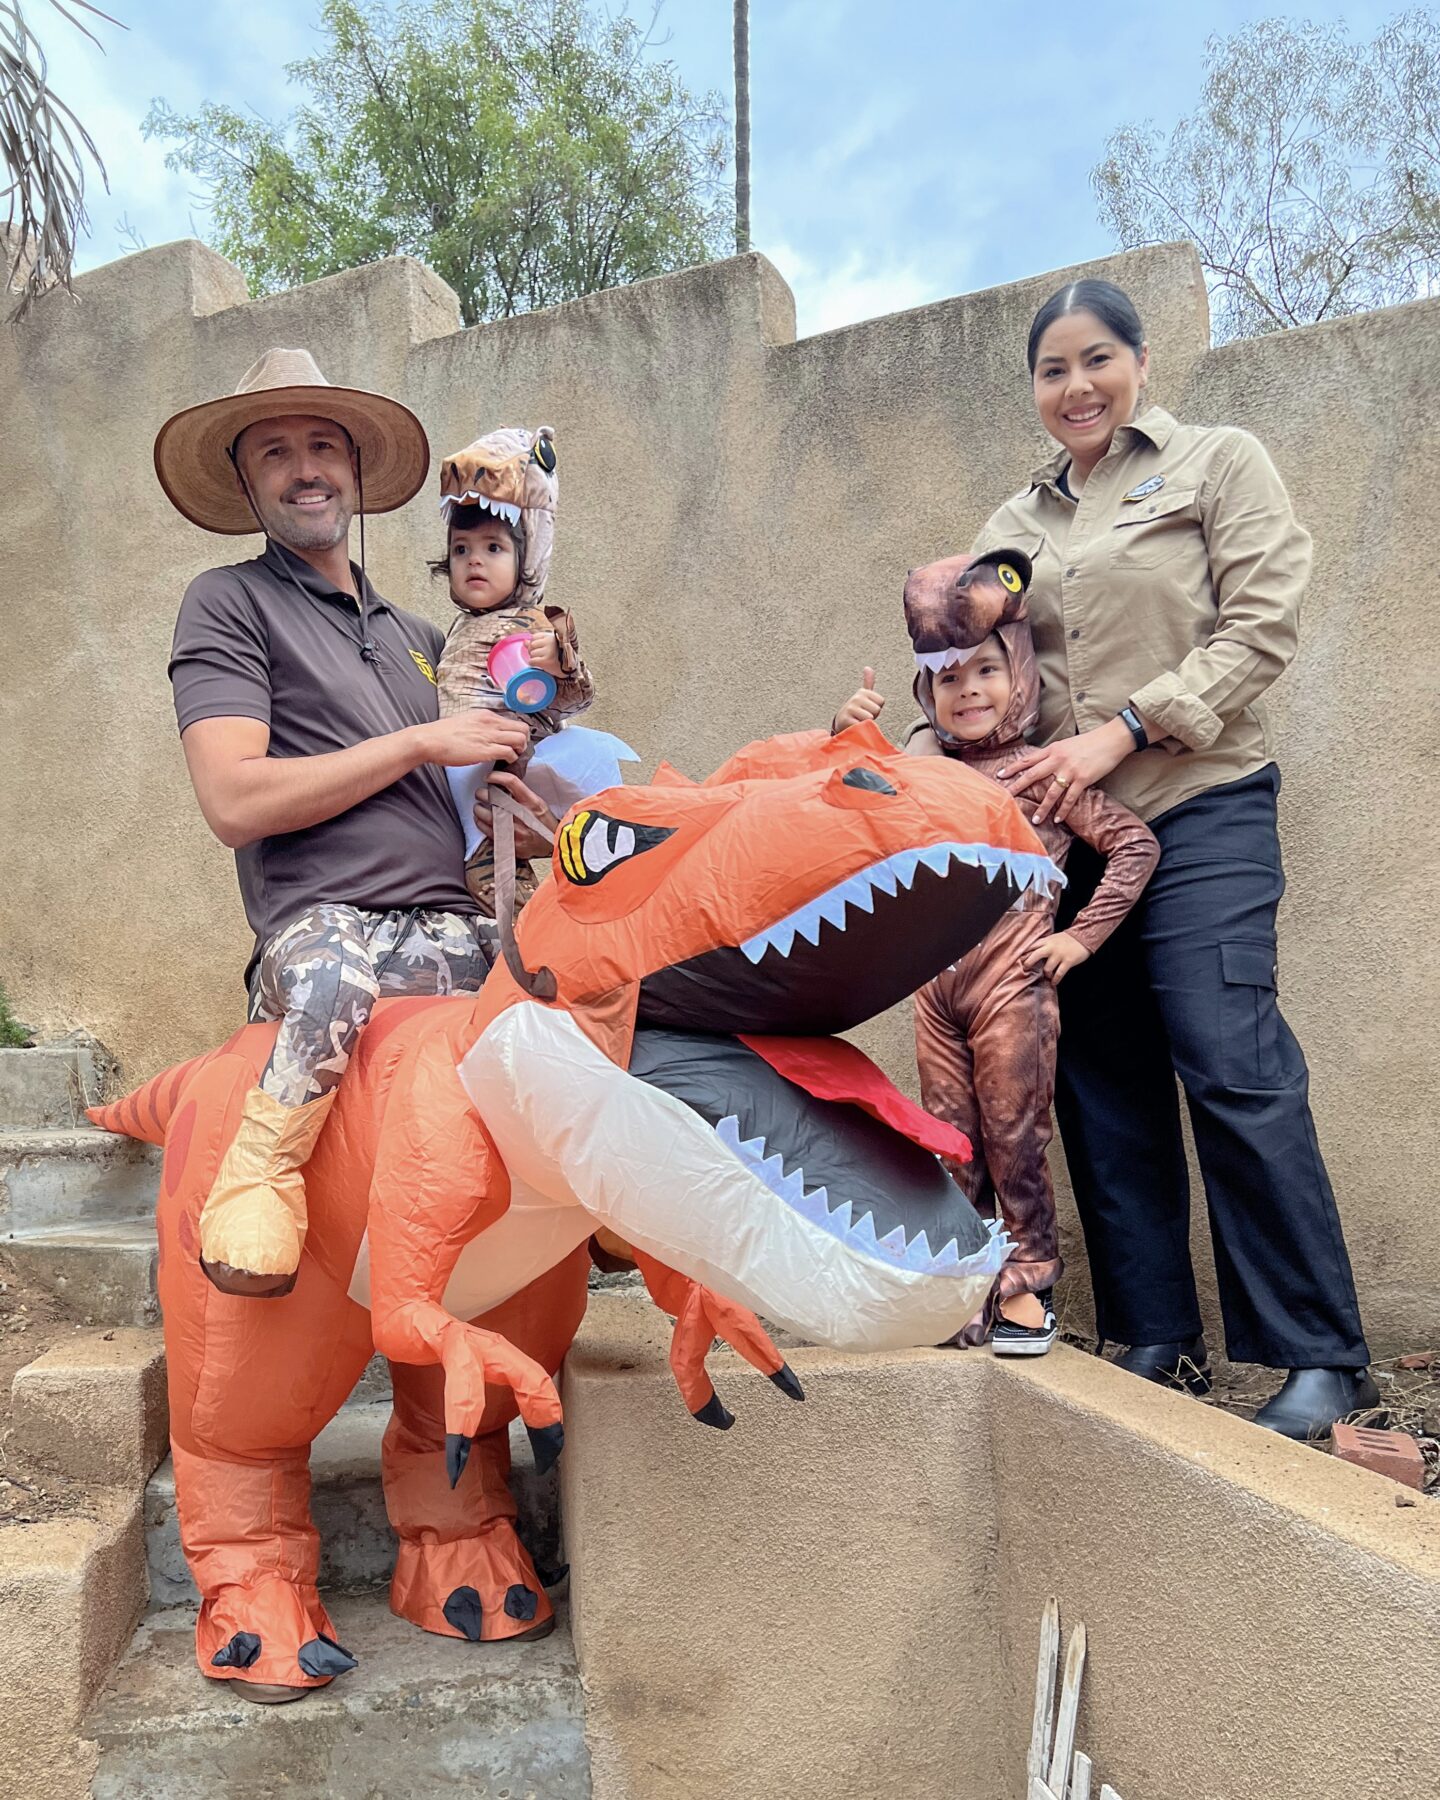 Jurassic World family costume, dinosaur costume for family, Jurassic Park costume idea for kids